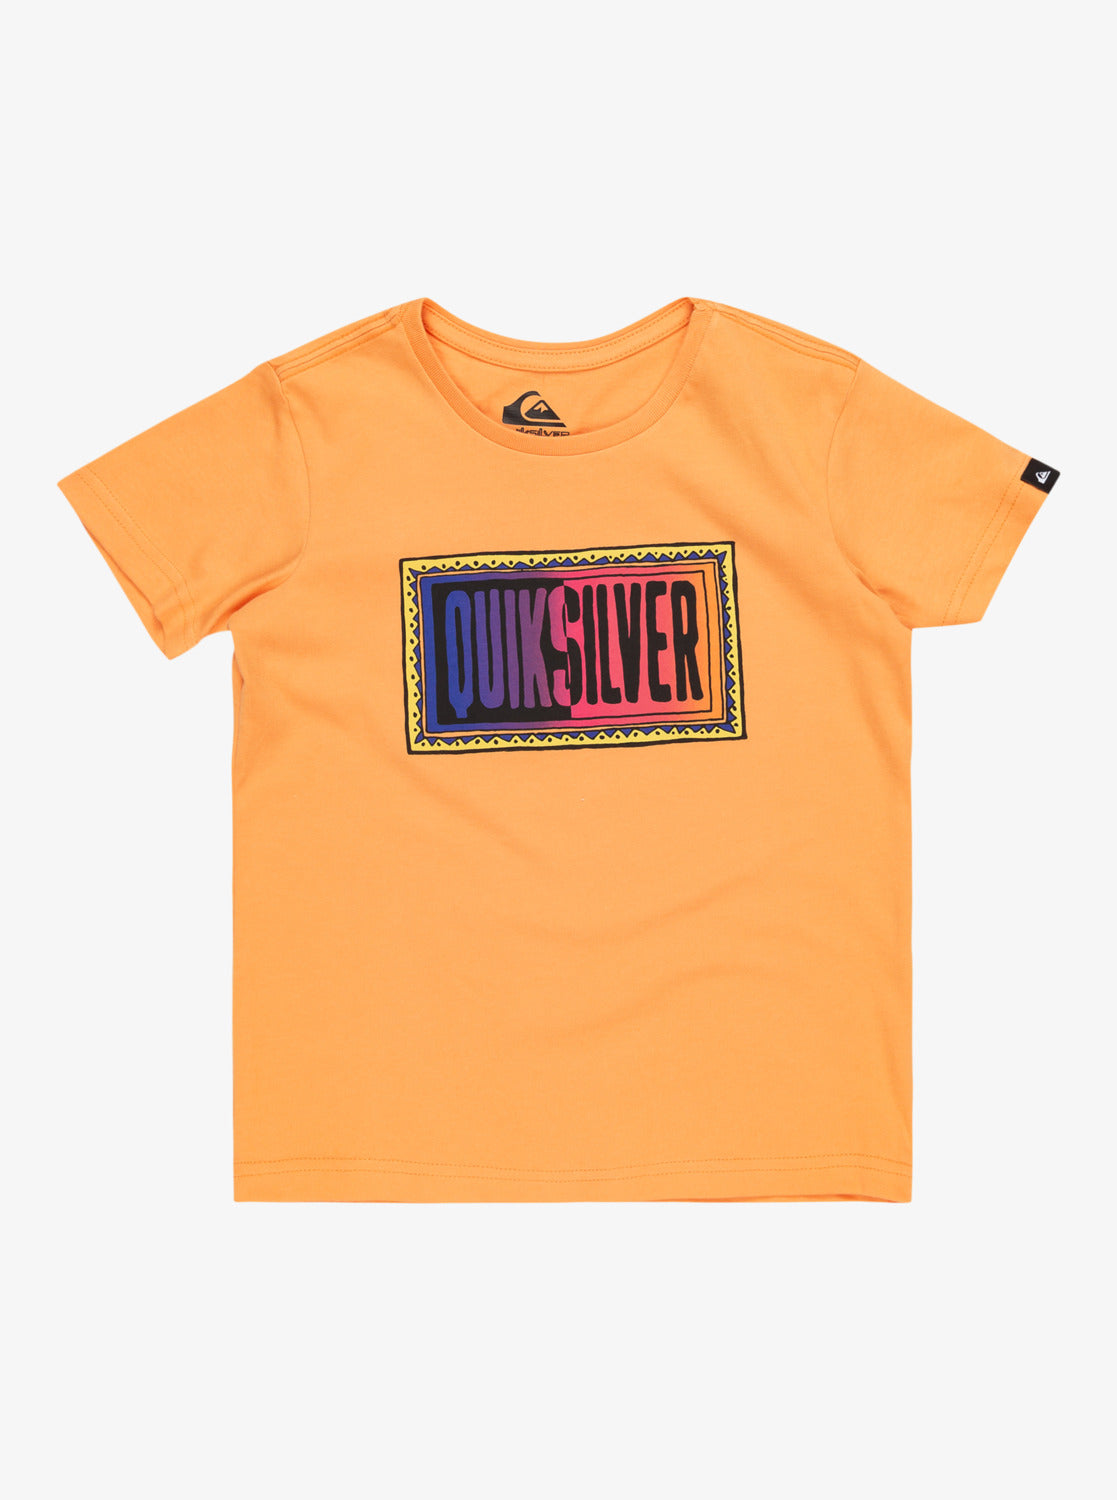 Quiksilver Day Tripper Boys T-Shirt in Tangerine